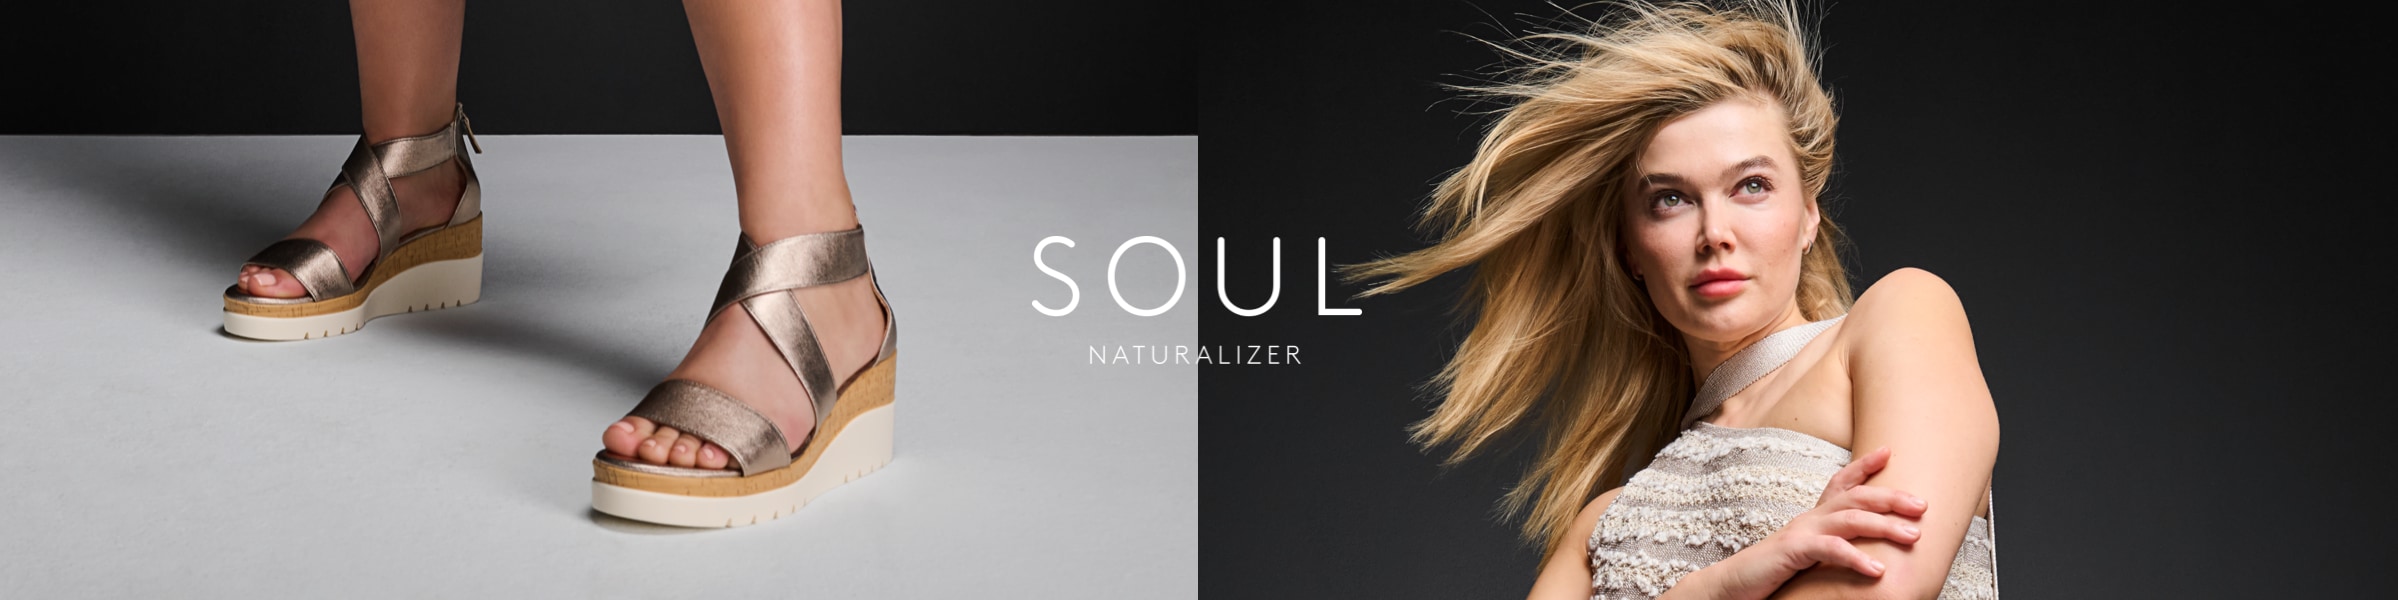 Naturalizer Soul